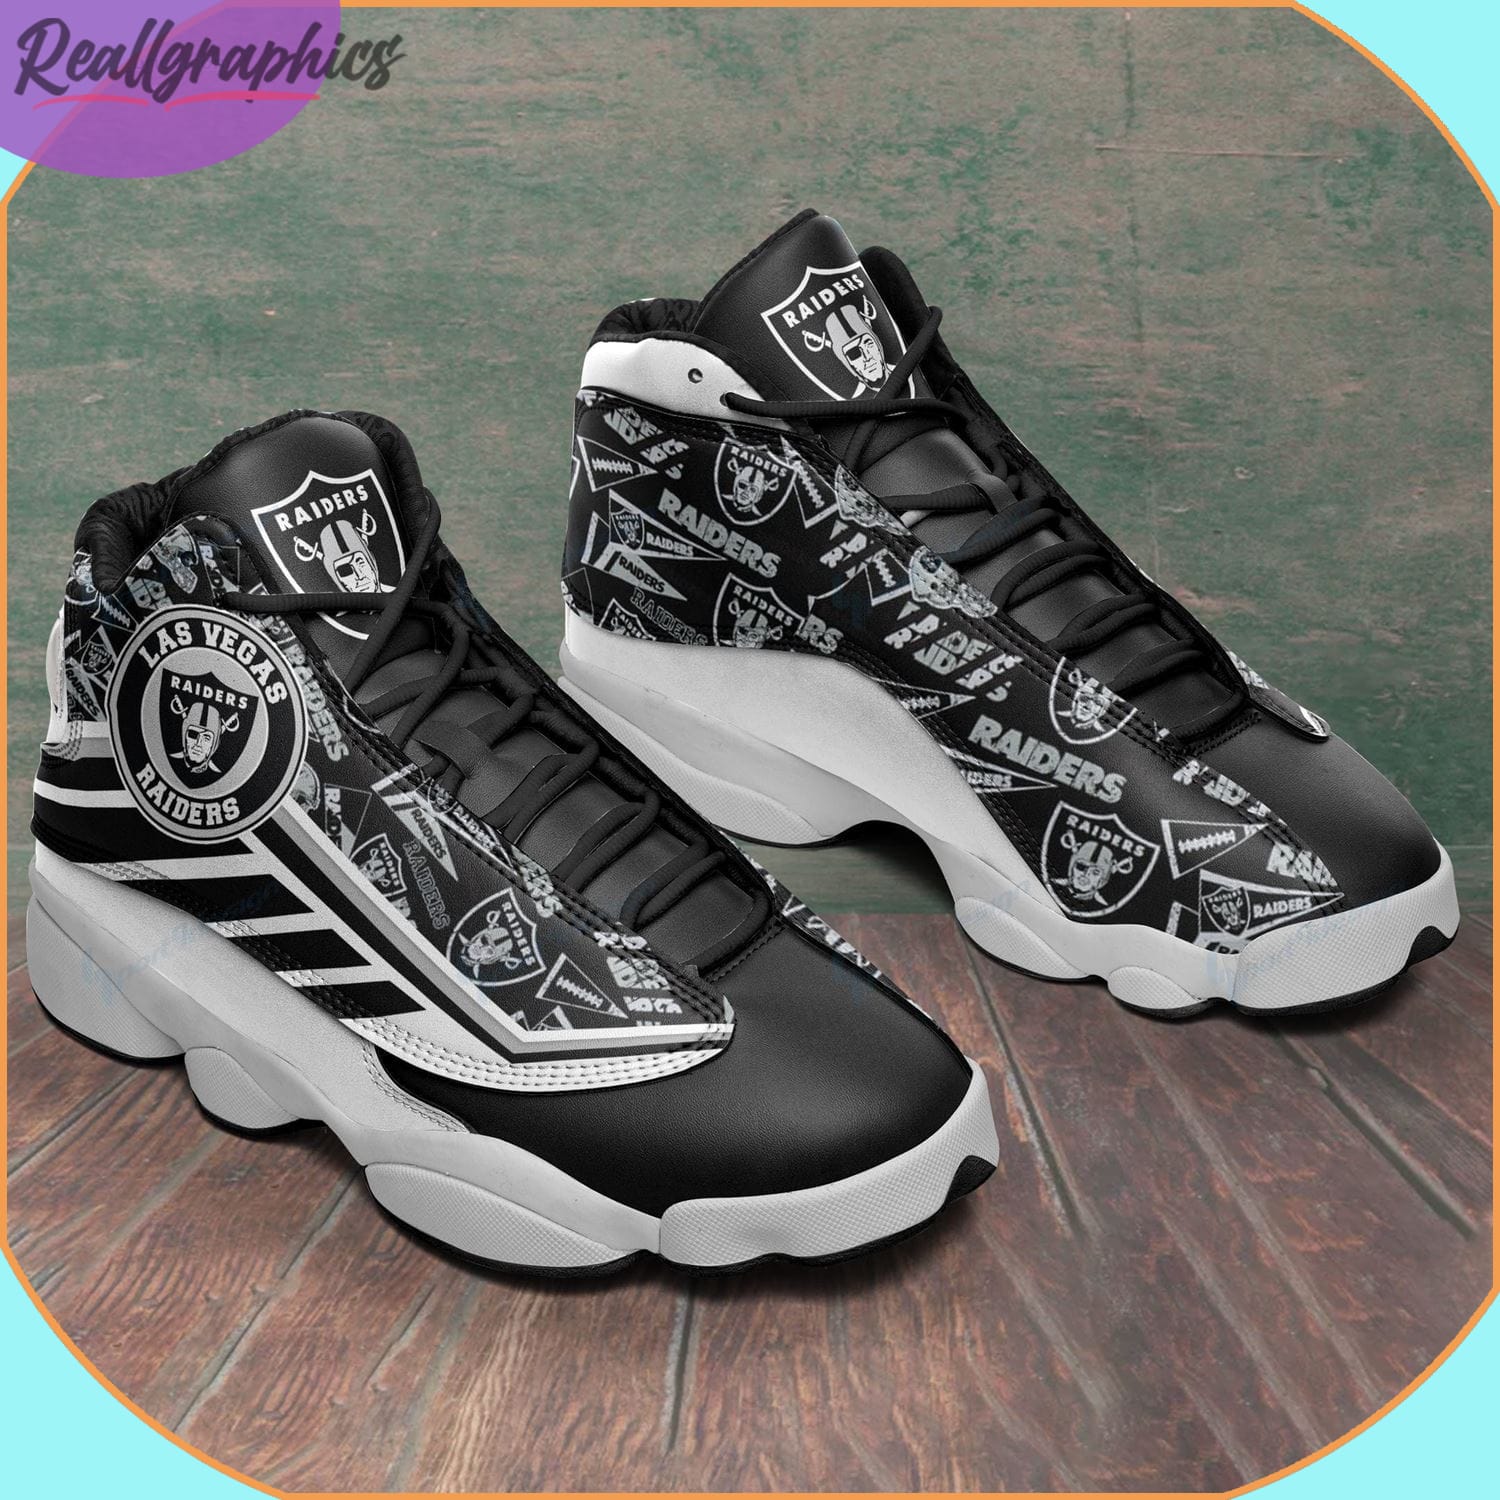 Las Vegas Raiders NFL Air Jordan 13 Shoes